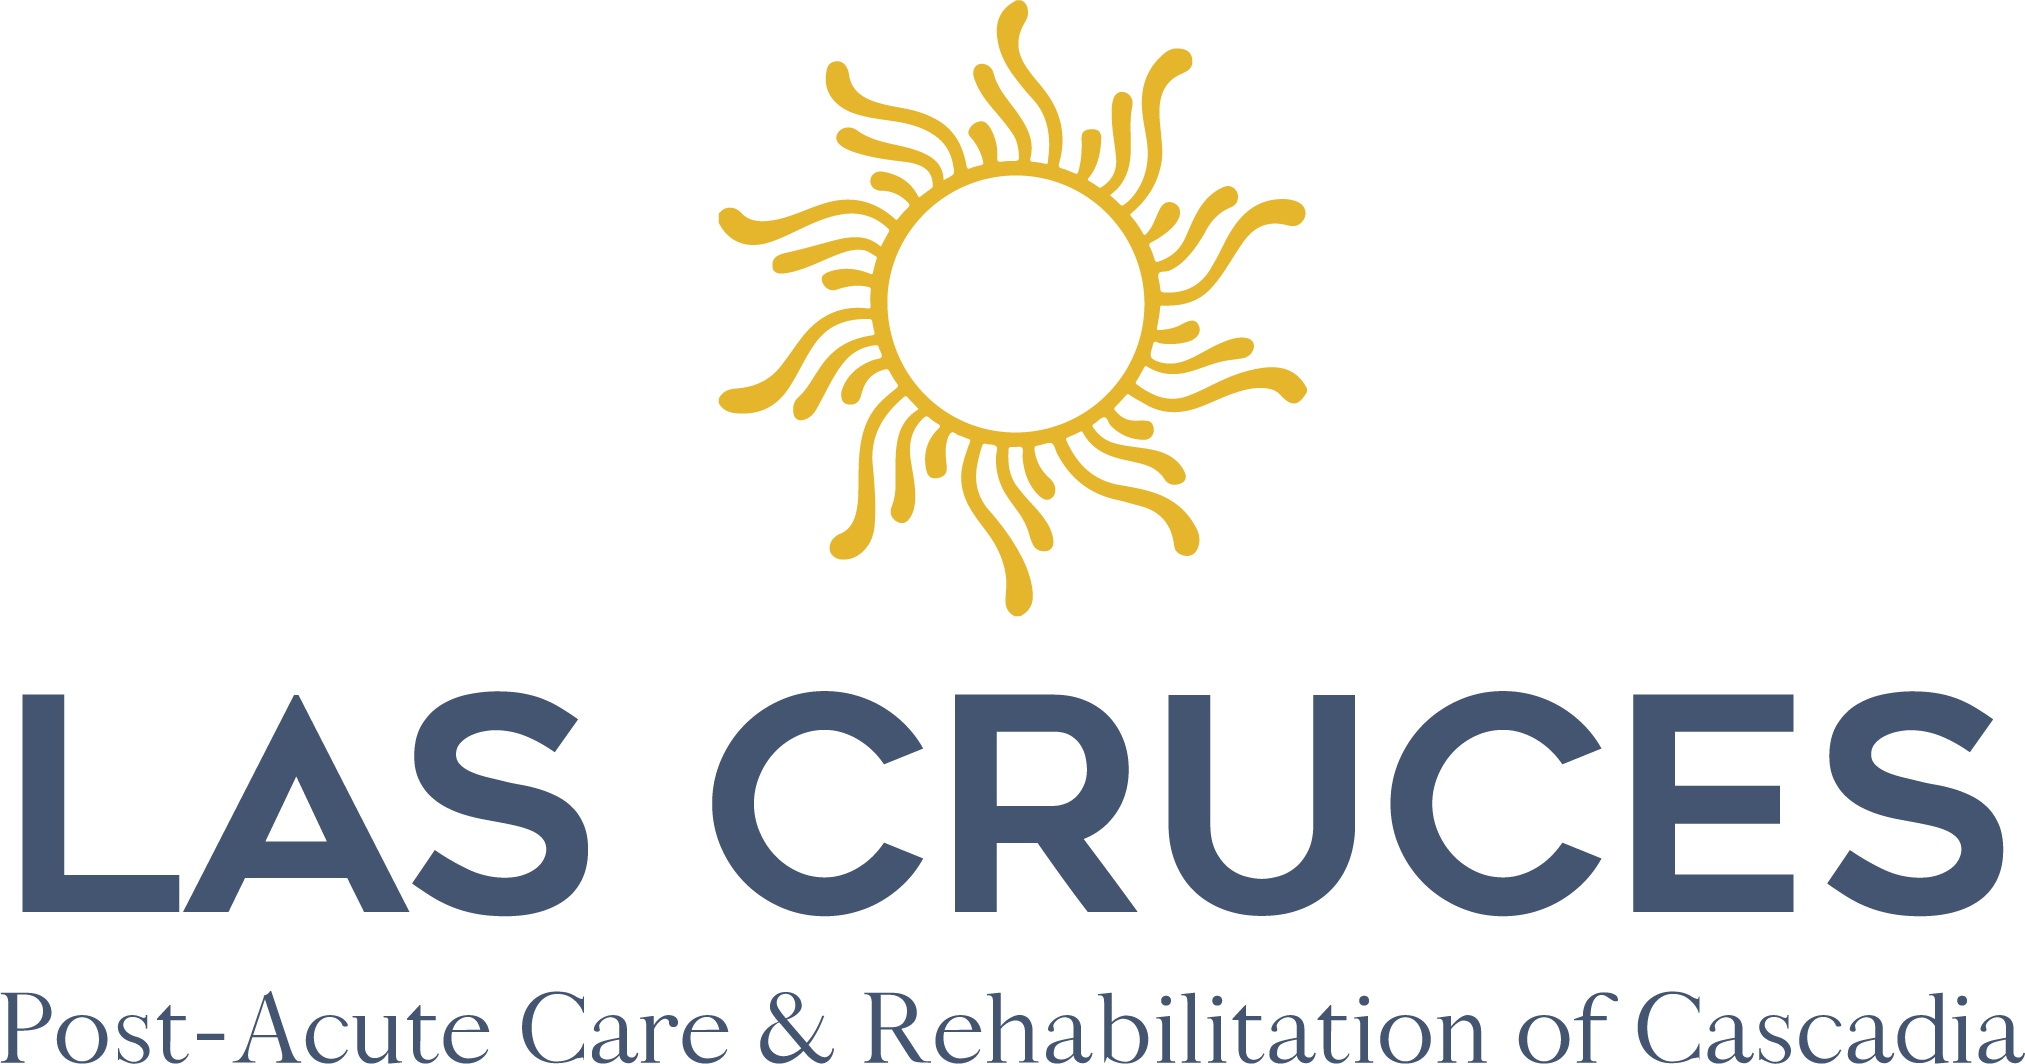 Las Cruces Post-Acute Care & Rehabilitation of Cascadia